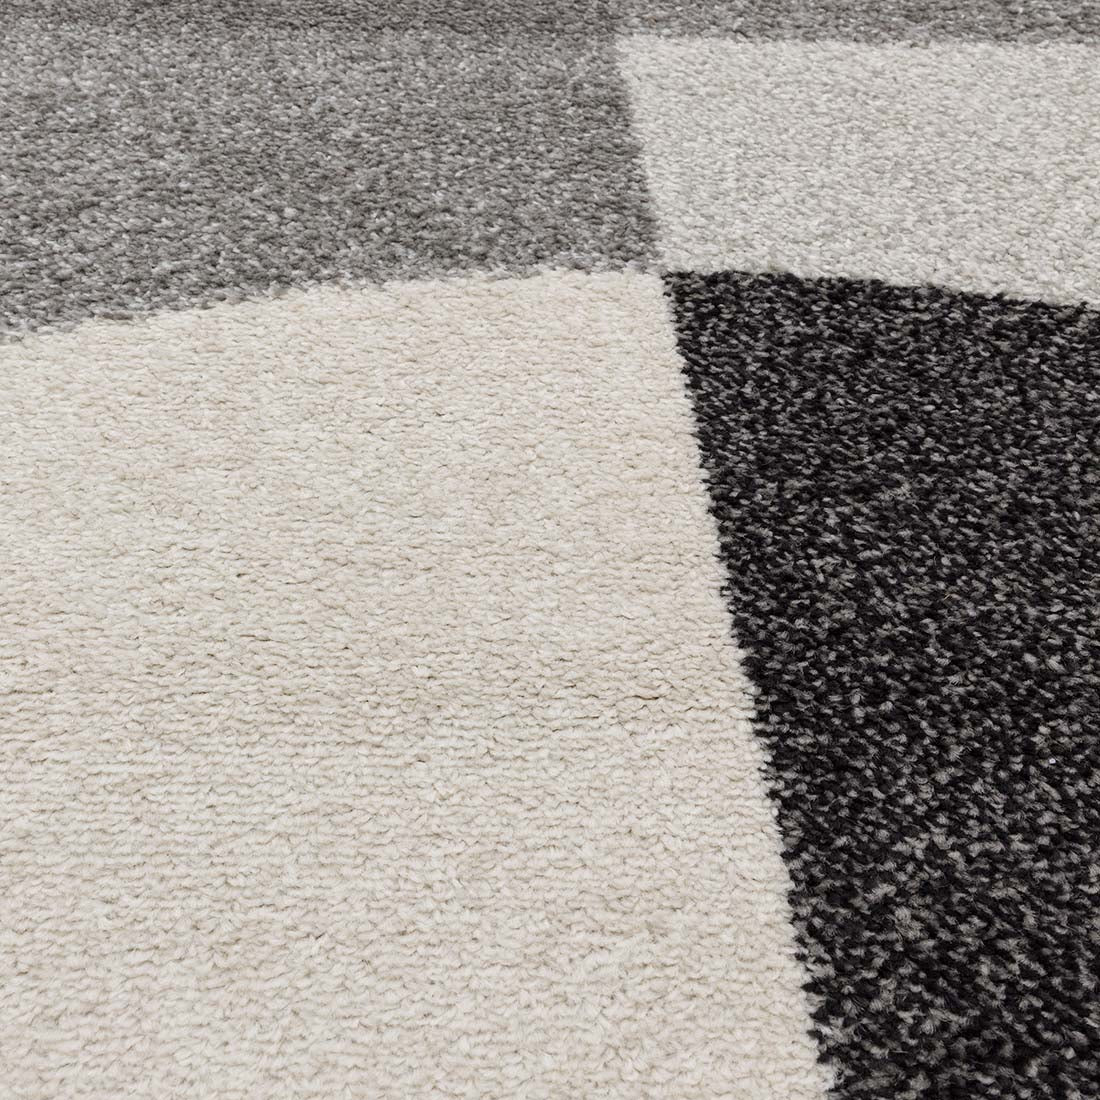 retro grey flatweave rug
